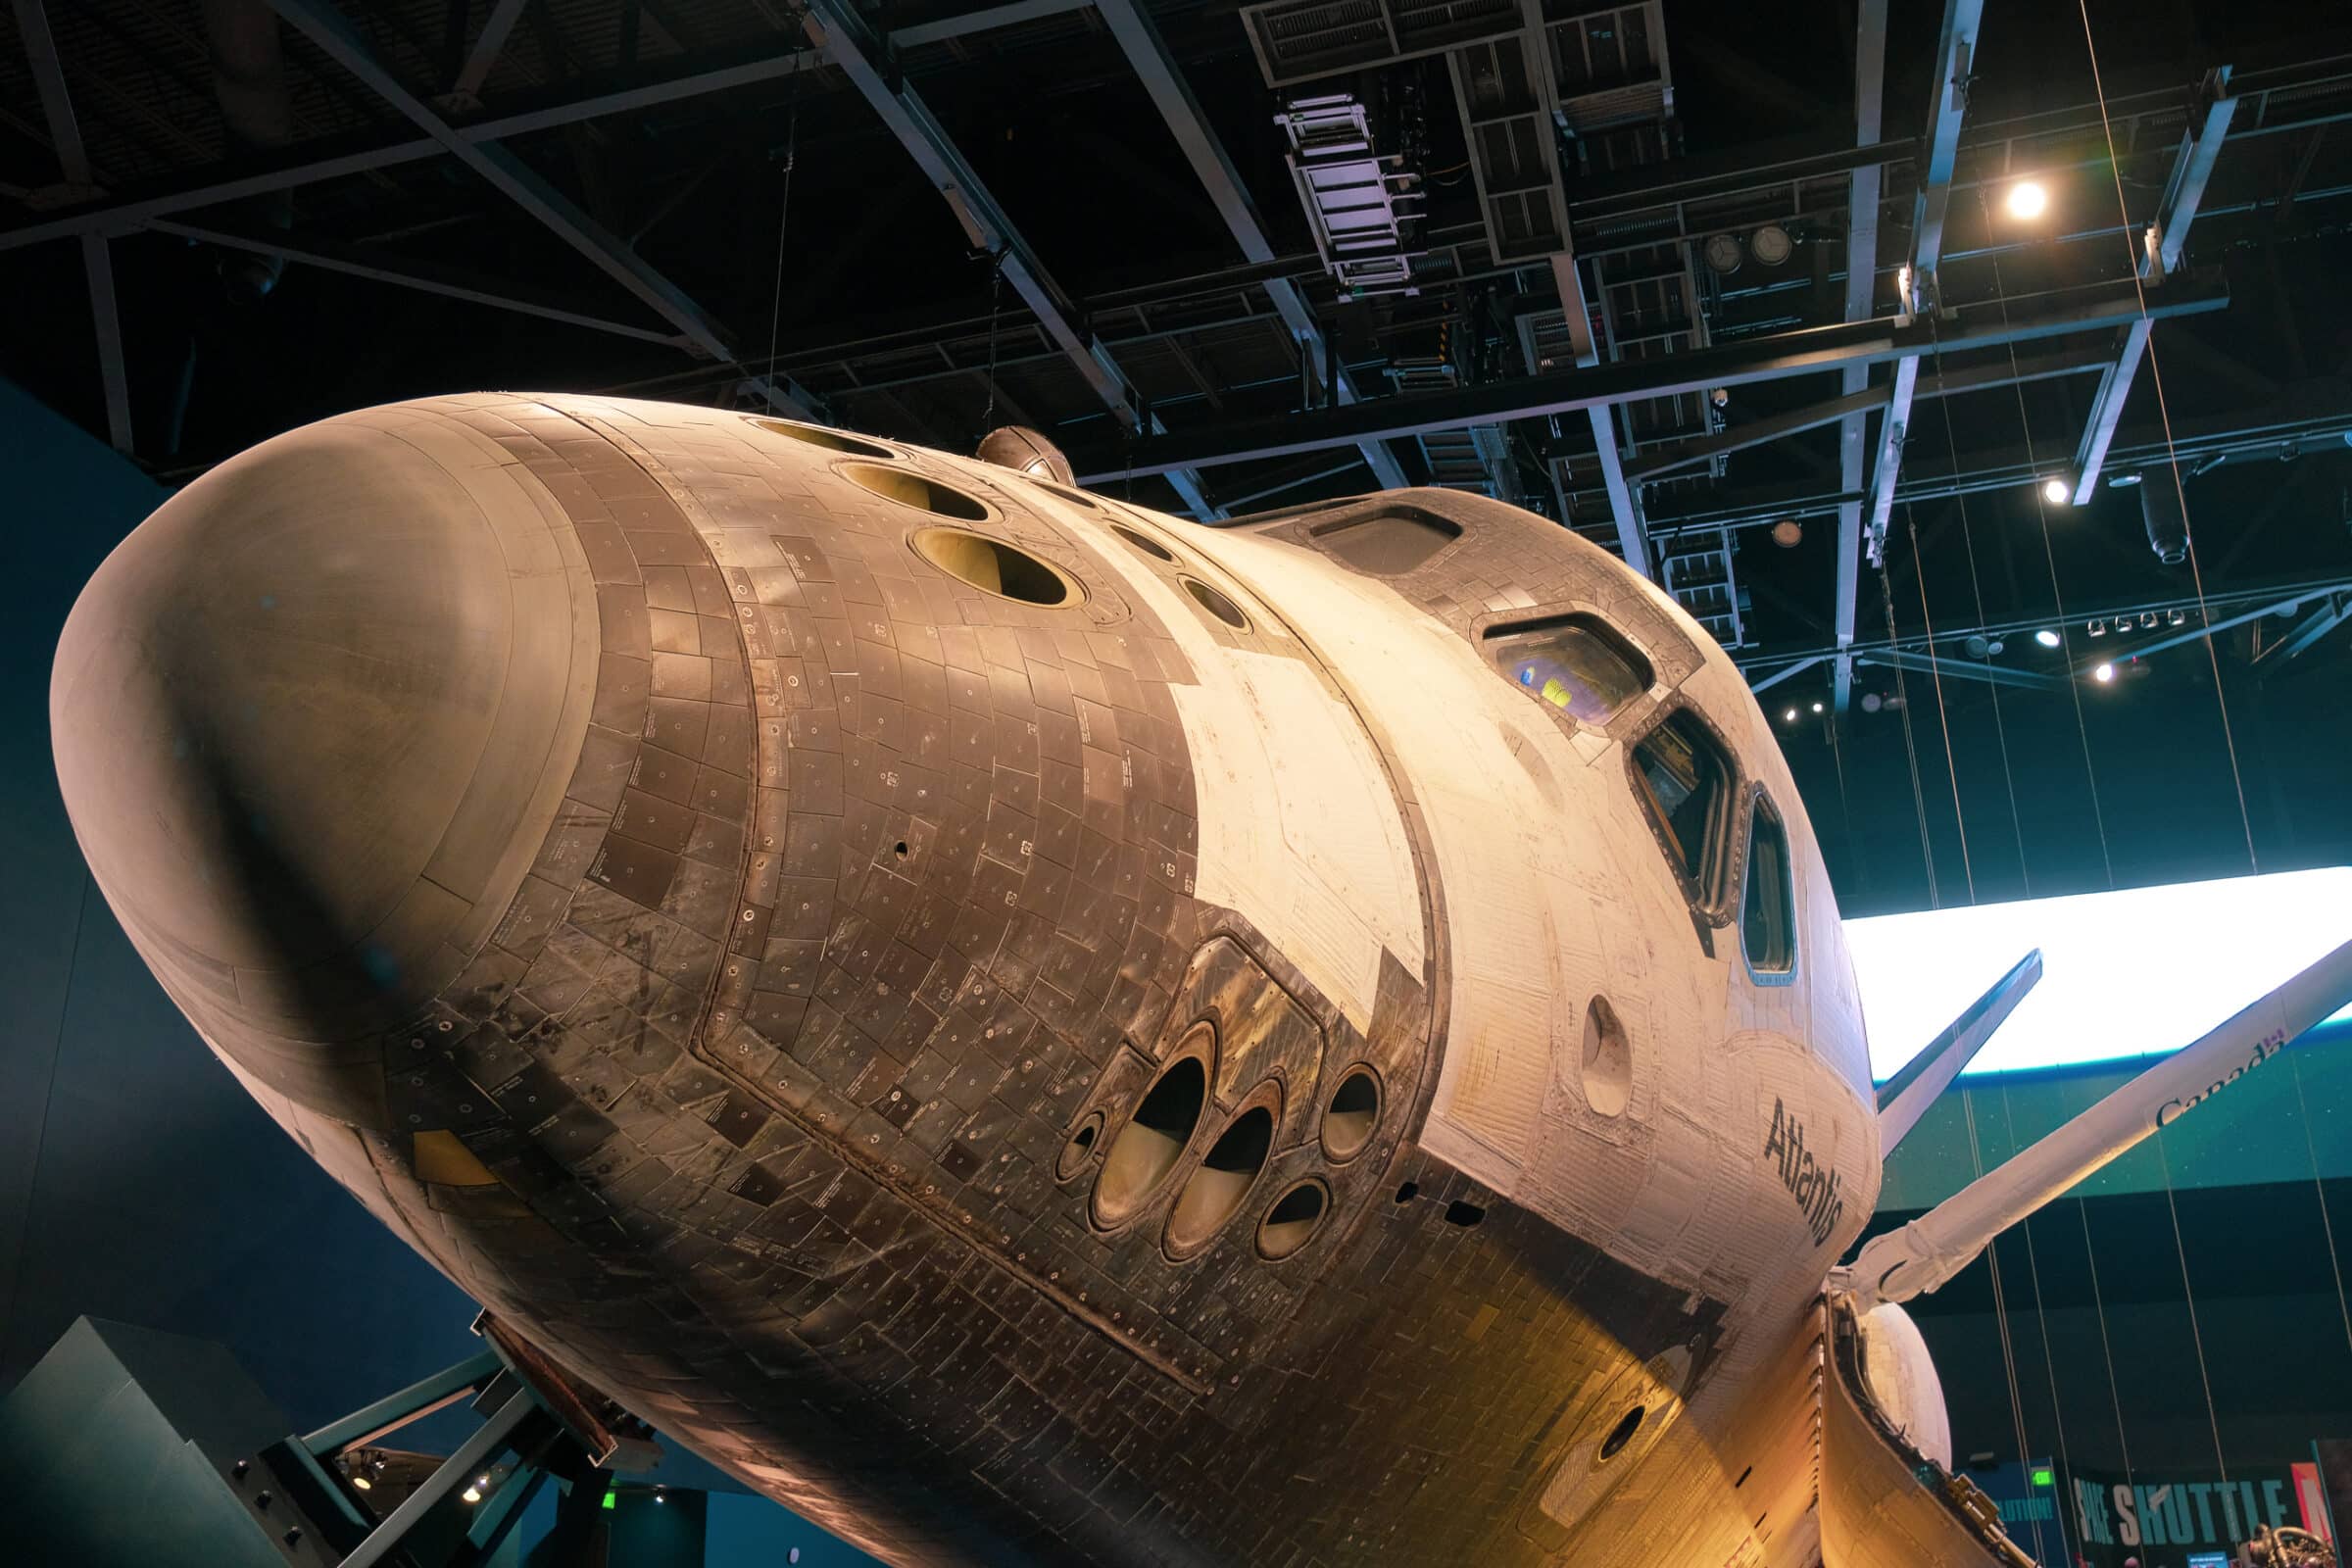 De Atlantis Space Shuttle, precies zoals hij was na terugkomt vanuit de ruimte